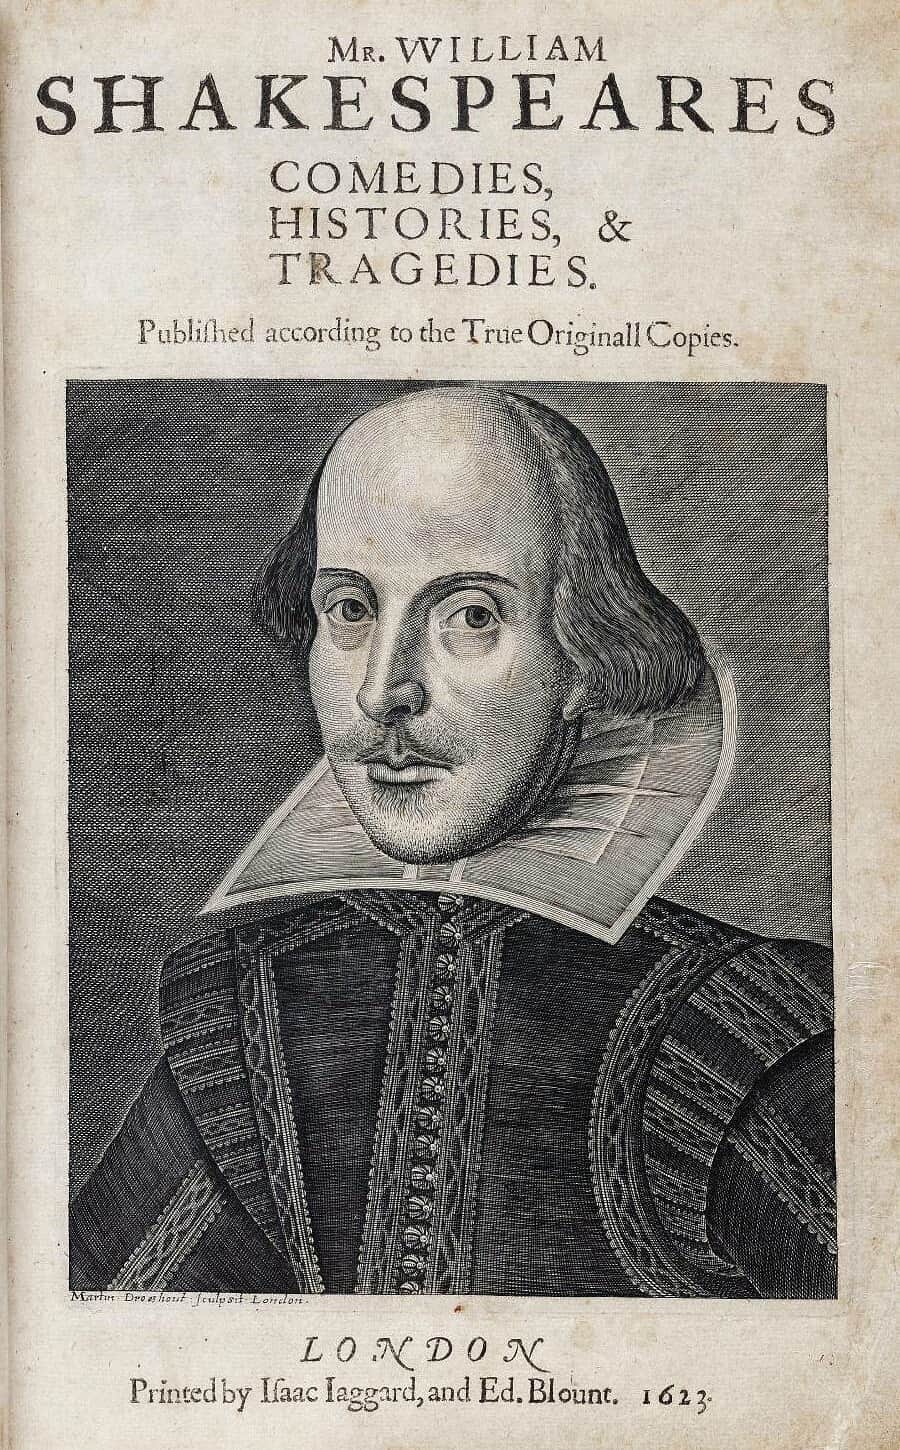 “Mr. William Shakespeare's Comedies, Histories & Tragedies” by William Shakespeare